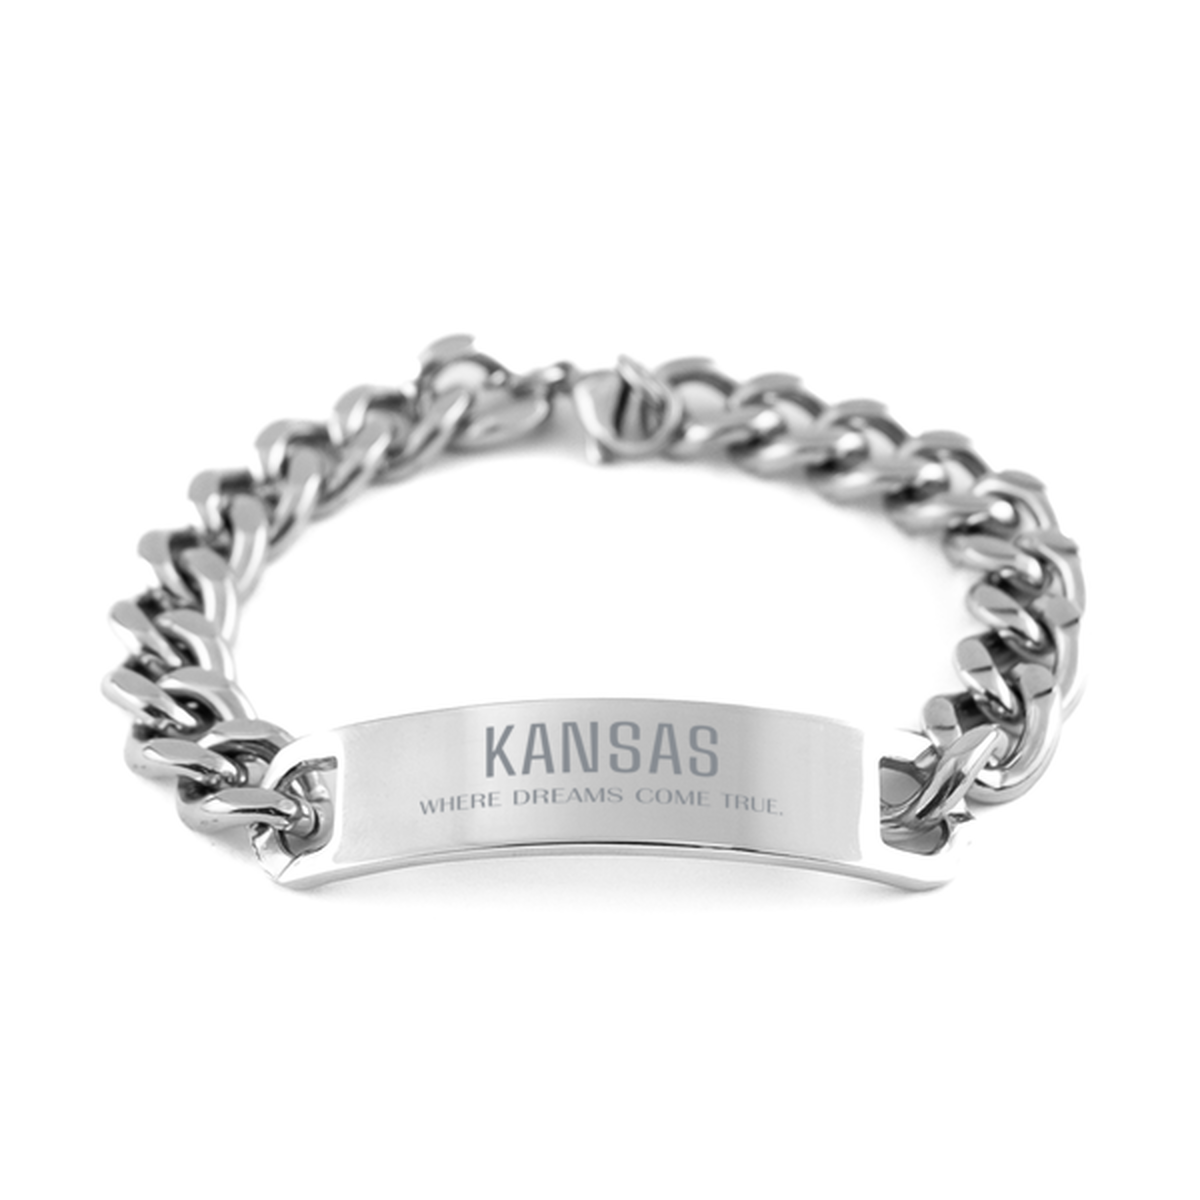 Love Kansas State Cuban Chain Stainless Steel Bracelet, Kansas Where dreams come true, Birthday Inspirational Gifts For Kansas Men, Women, Friends